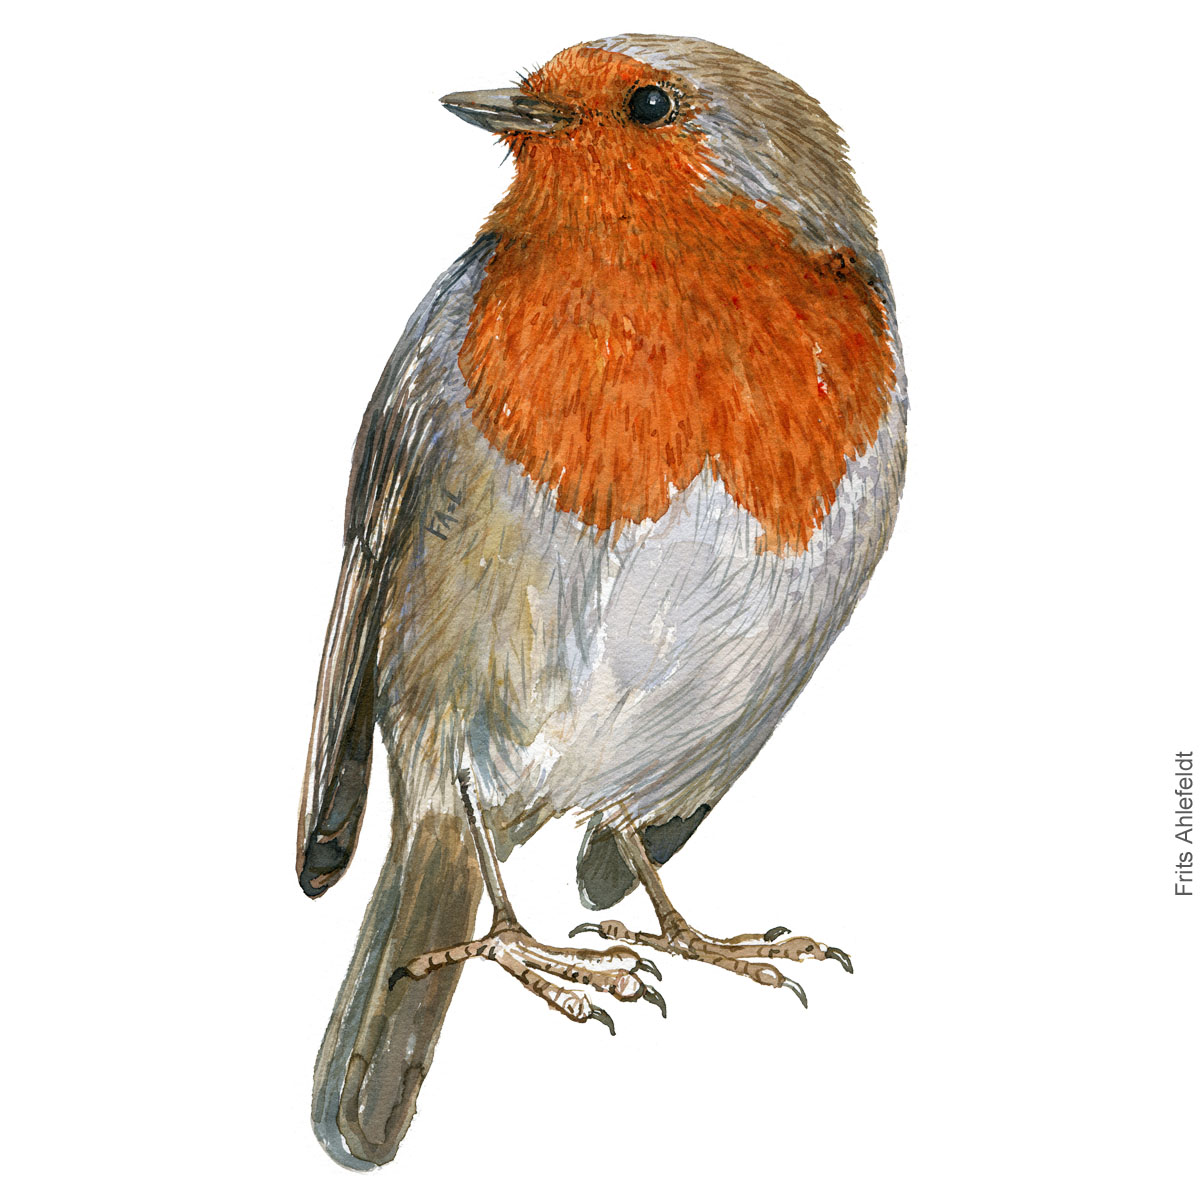 Rødhals - Robin bird watercolor illustration. Painting by Frits Ahlefeldt. Fugle akvarel